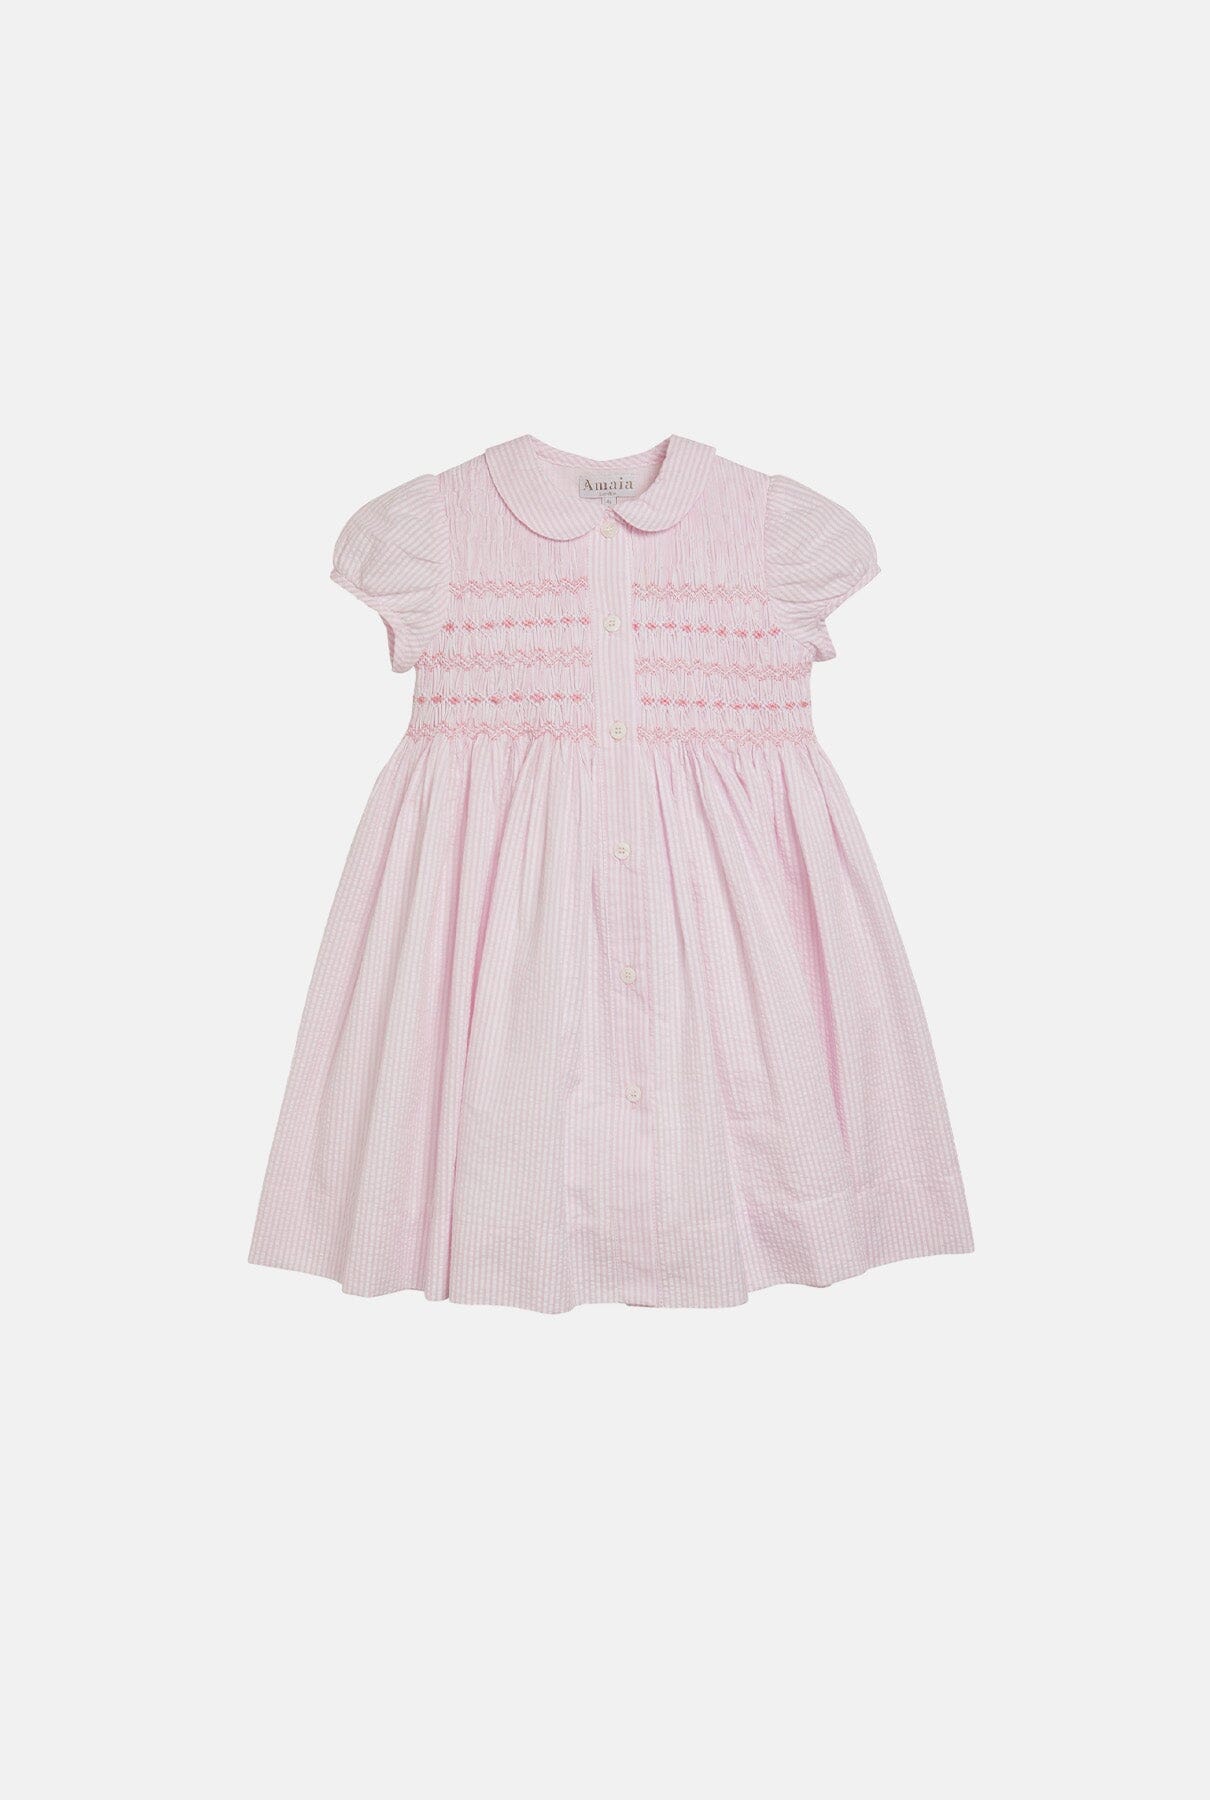 Jujube Dress Pink stripe Kids Clothing Amaia London 